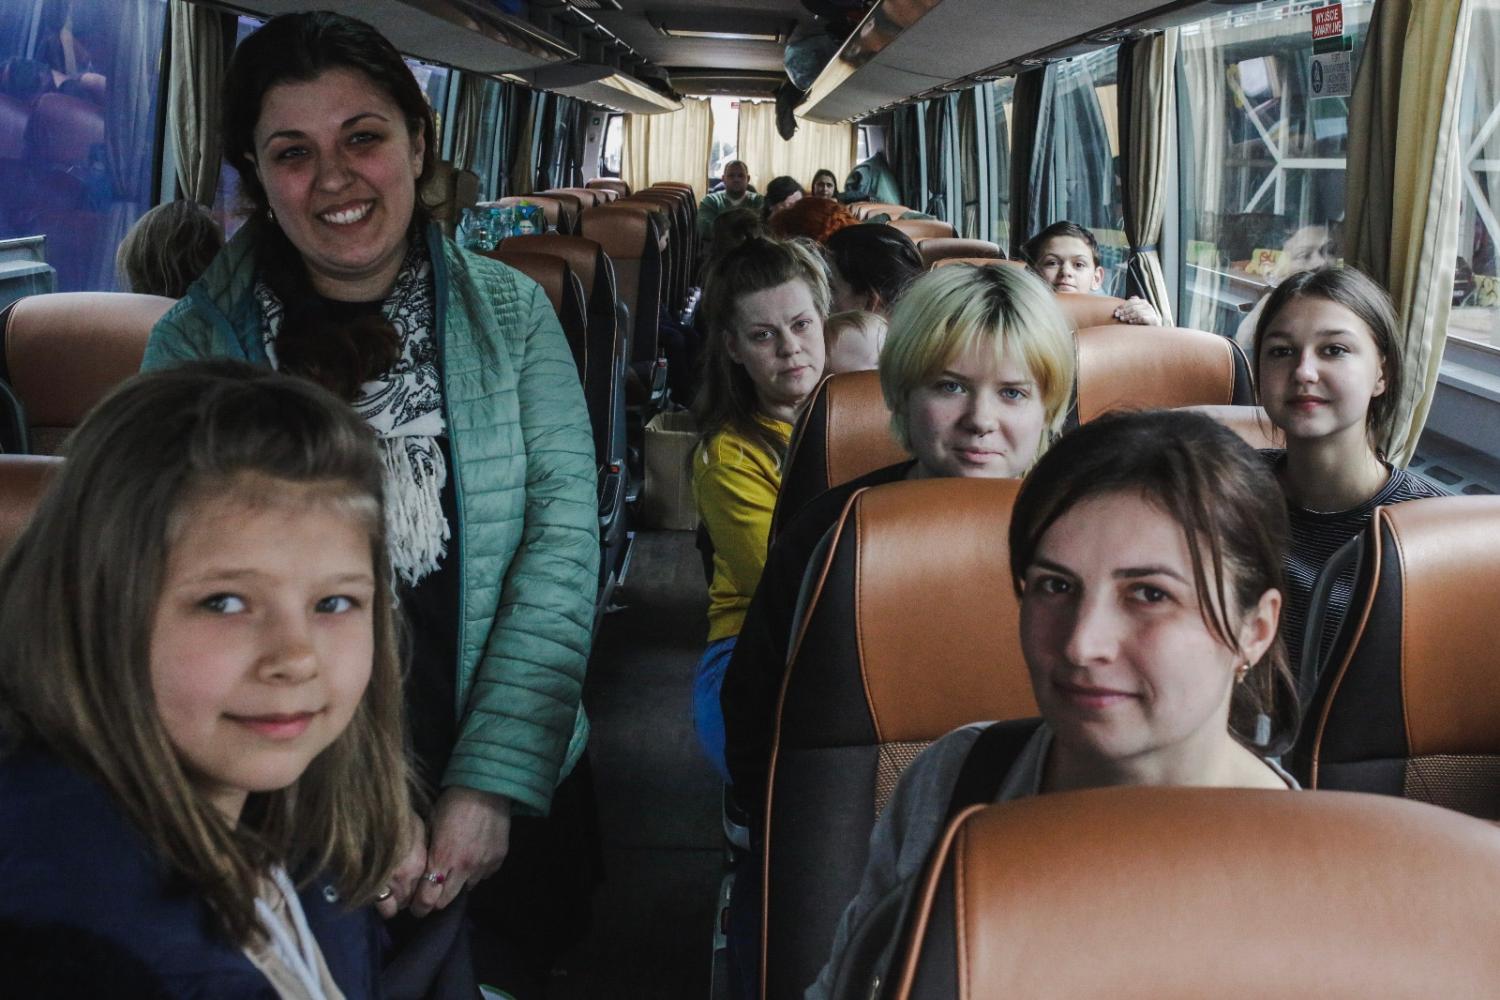 Anadolu/Getty - Refugees from Ukraine arrive in Barcelona